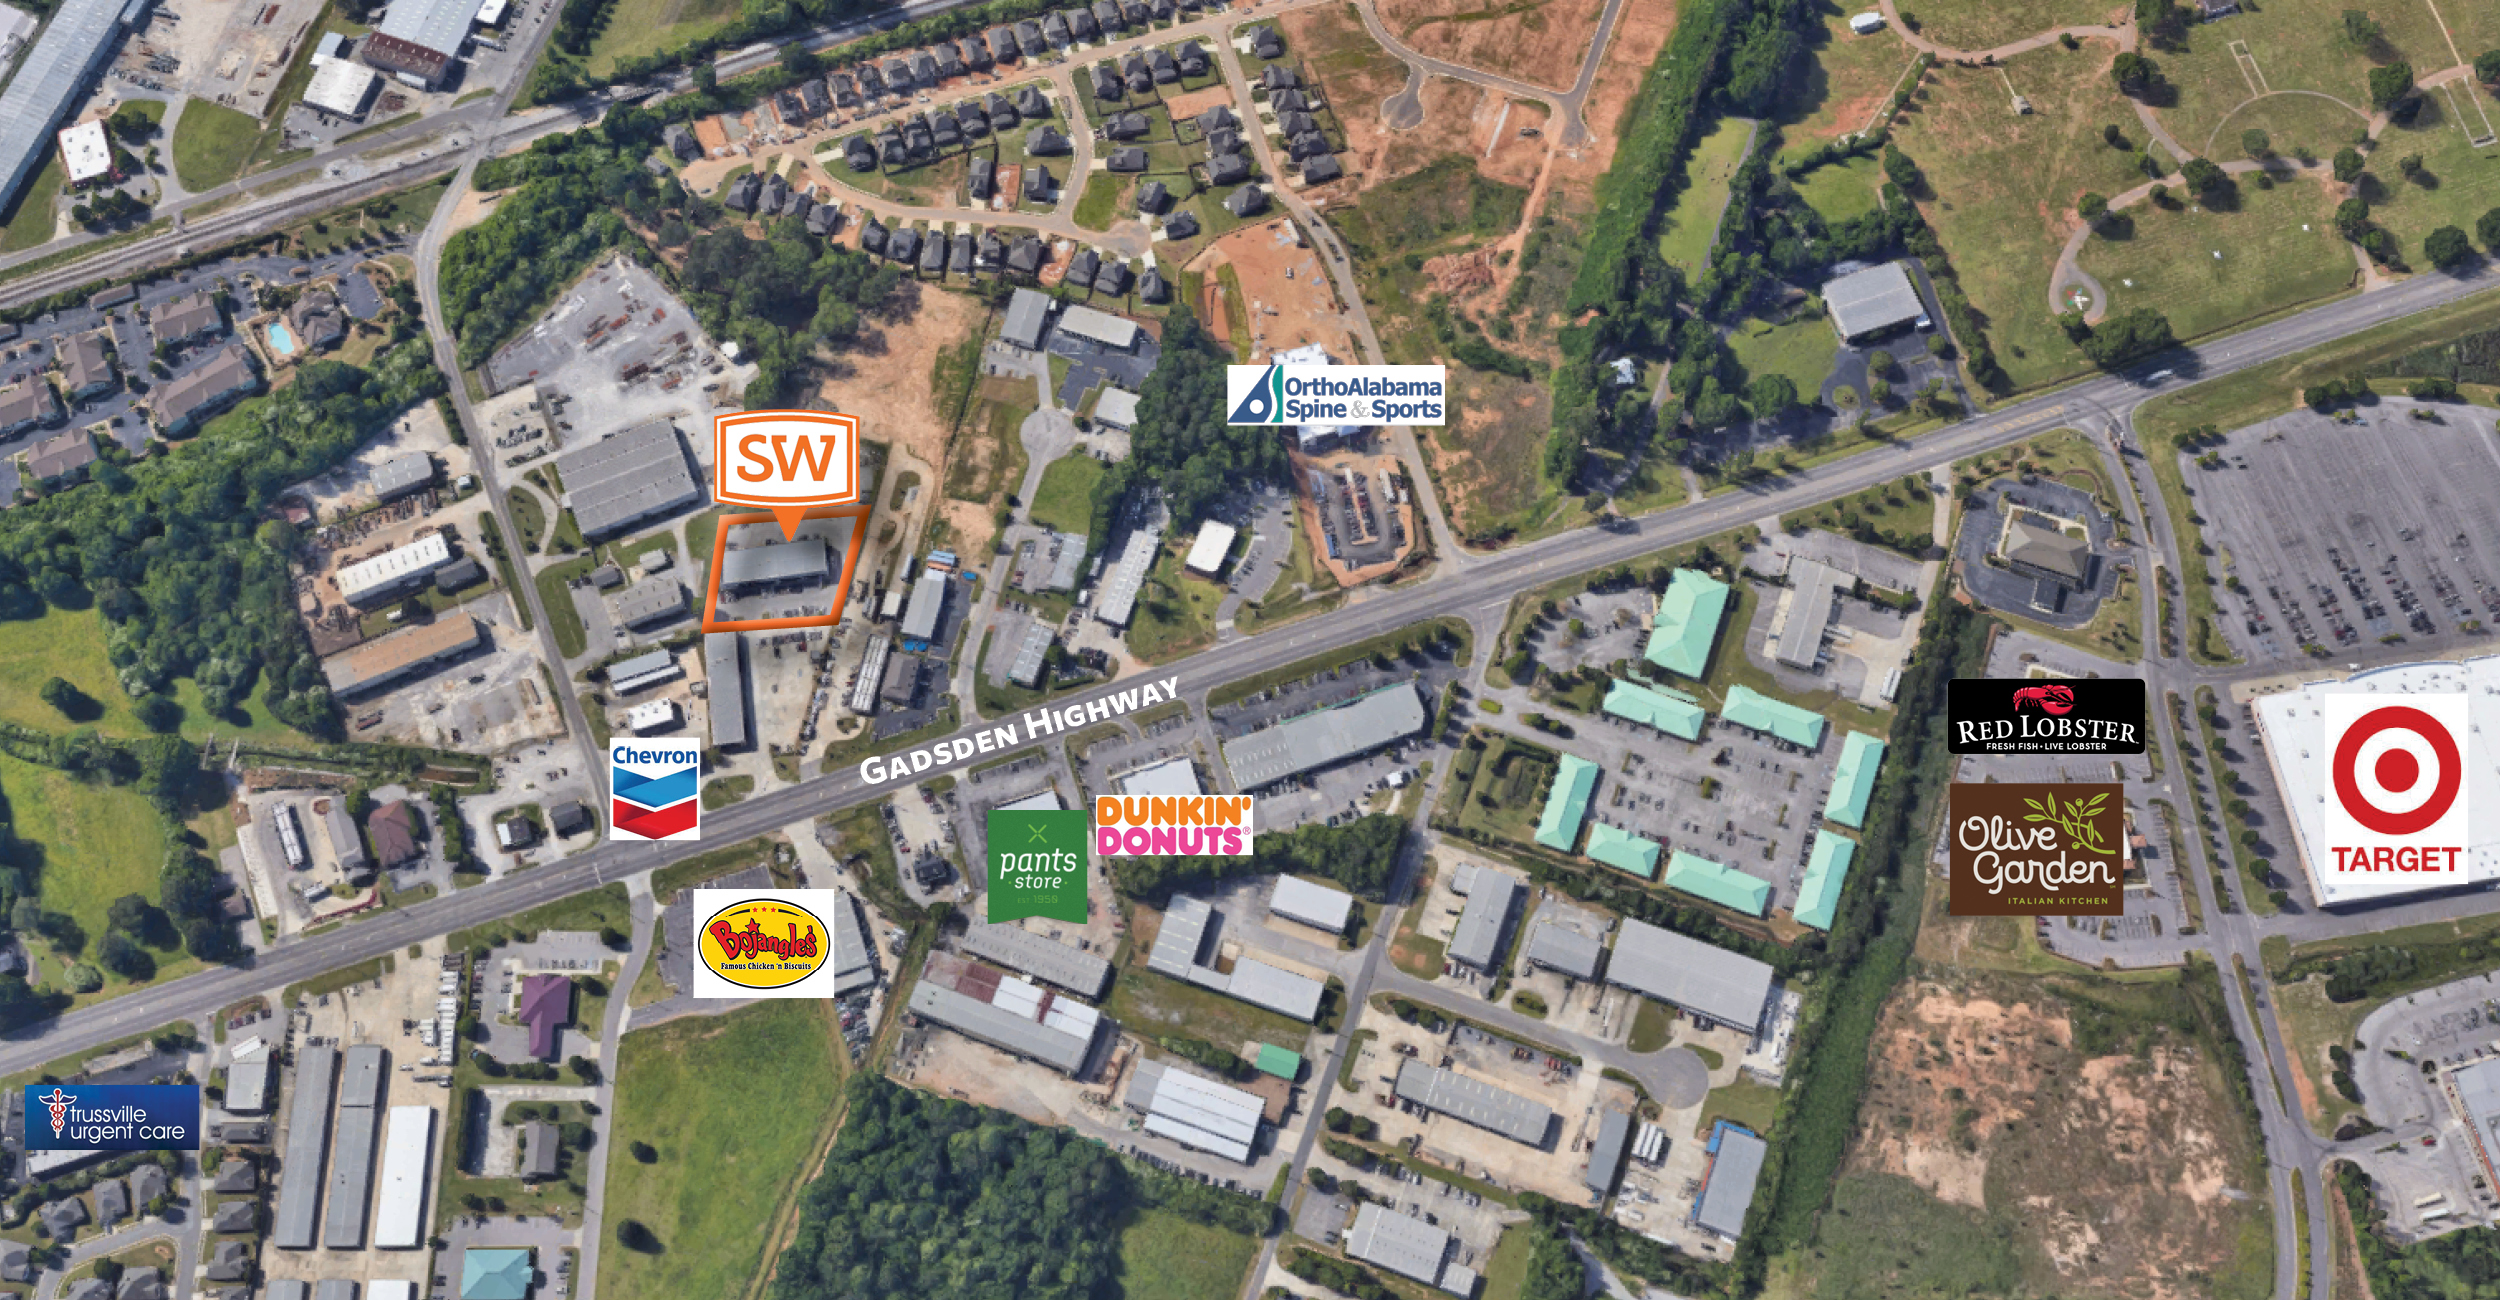 Retail strip center in Trussville sells for $1.875 million